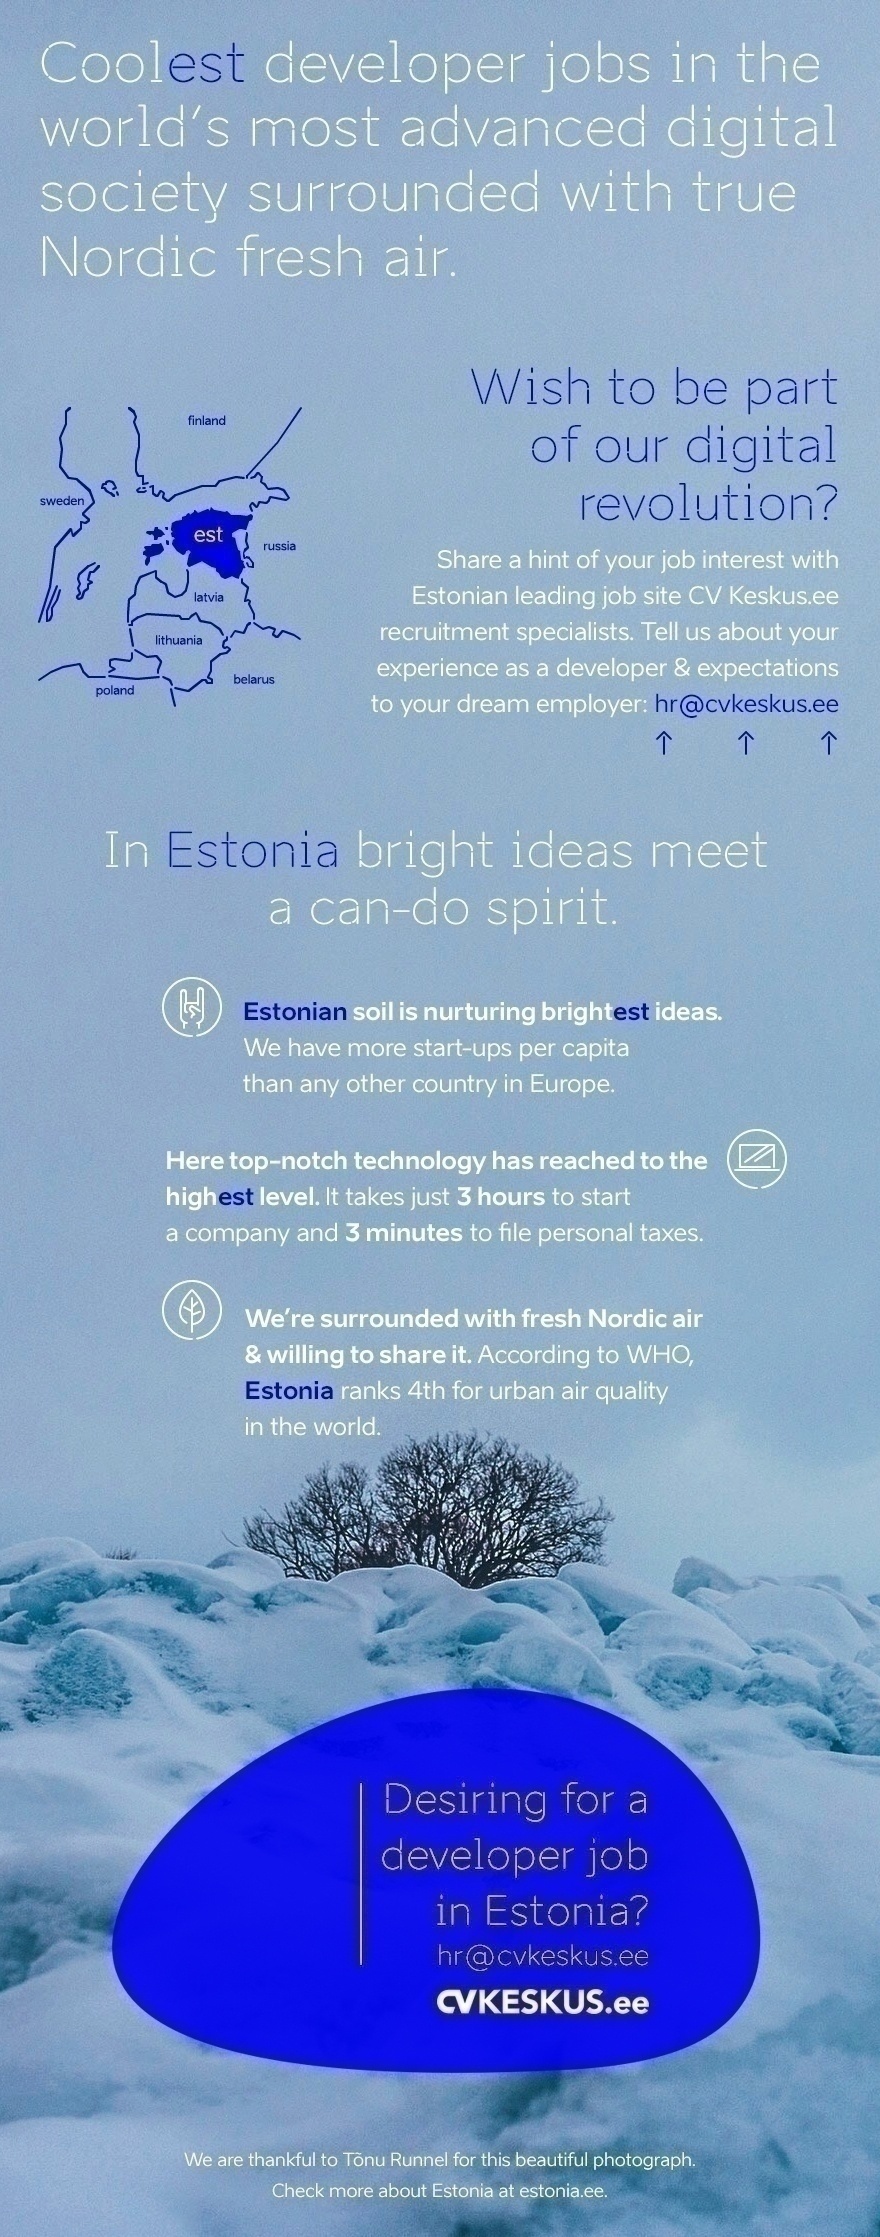 CV KESKUS OÜ Developer, welcome to Estonia!